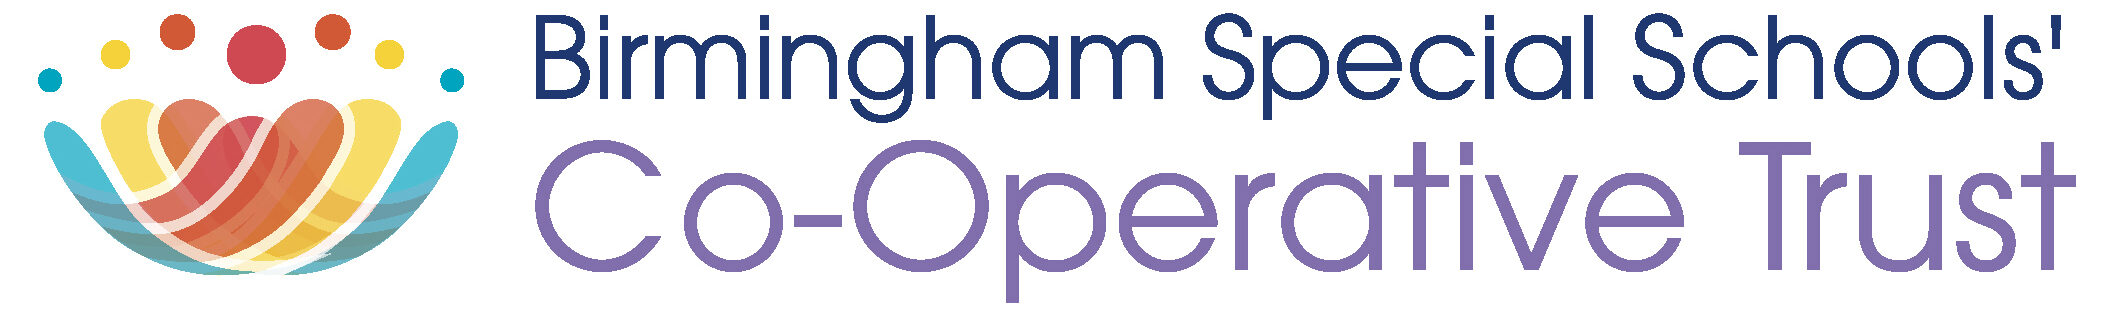 Birmingham Special Schools' Co-Operative Trust